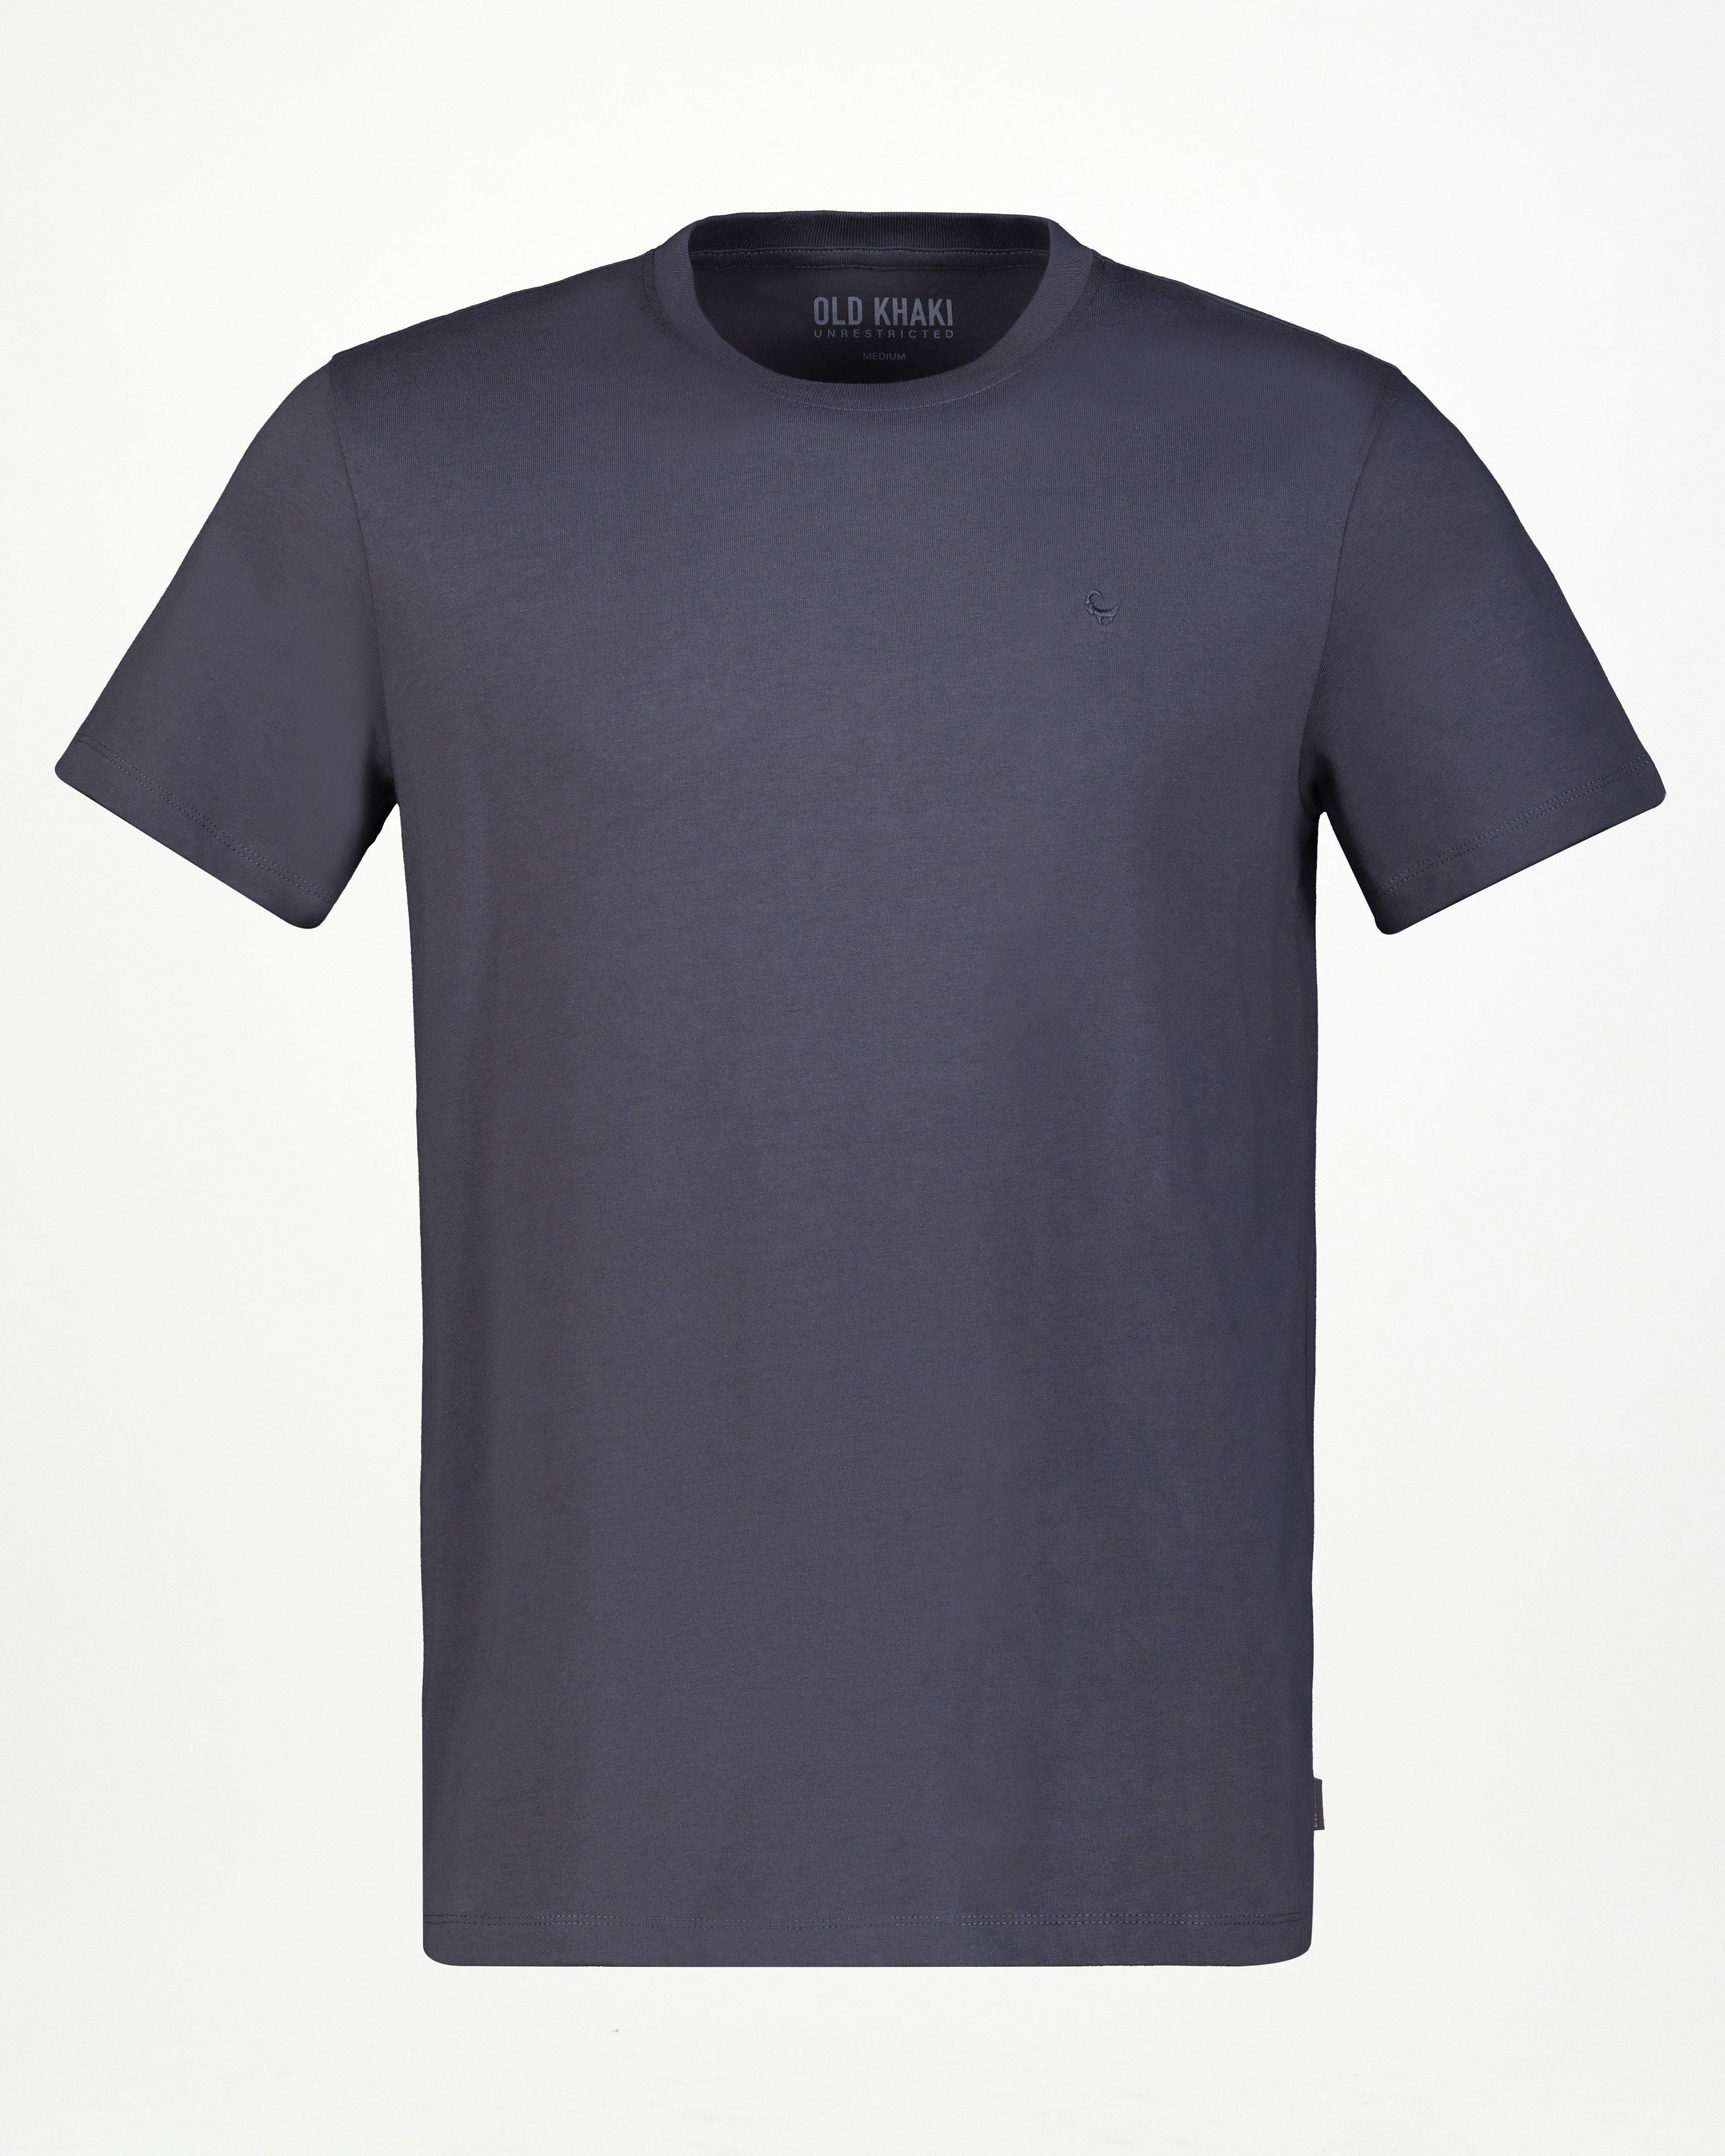 Men’s Nick Standard Fit T-Shirt -  Charcoal